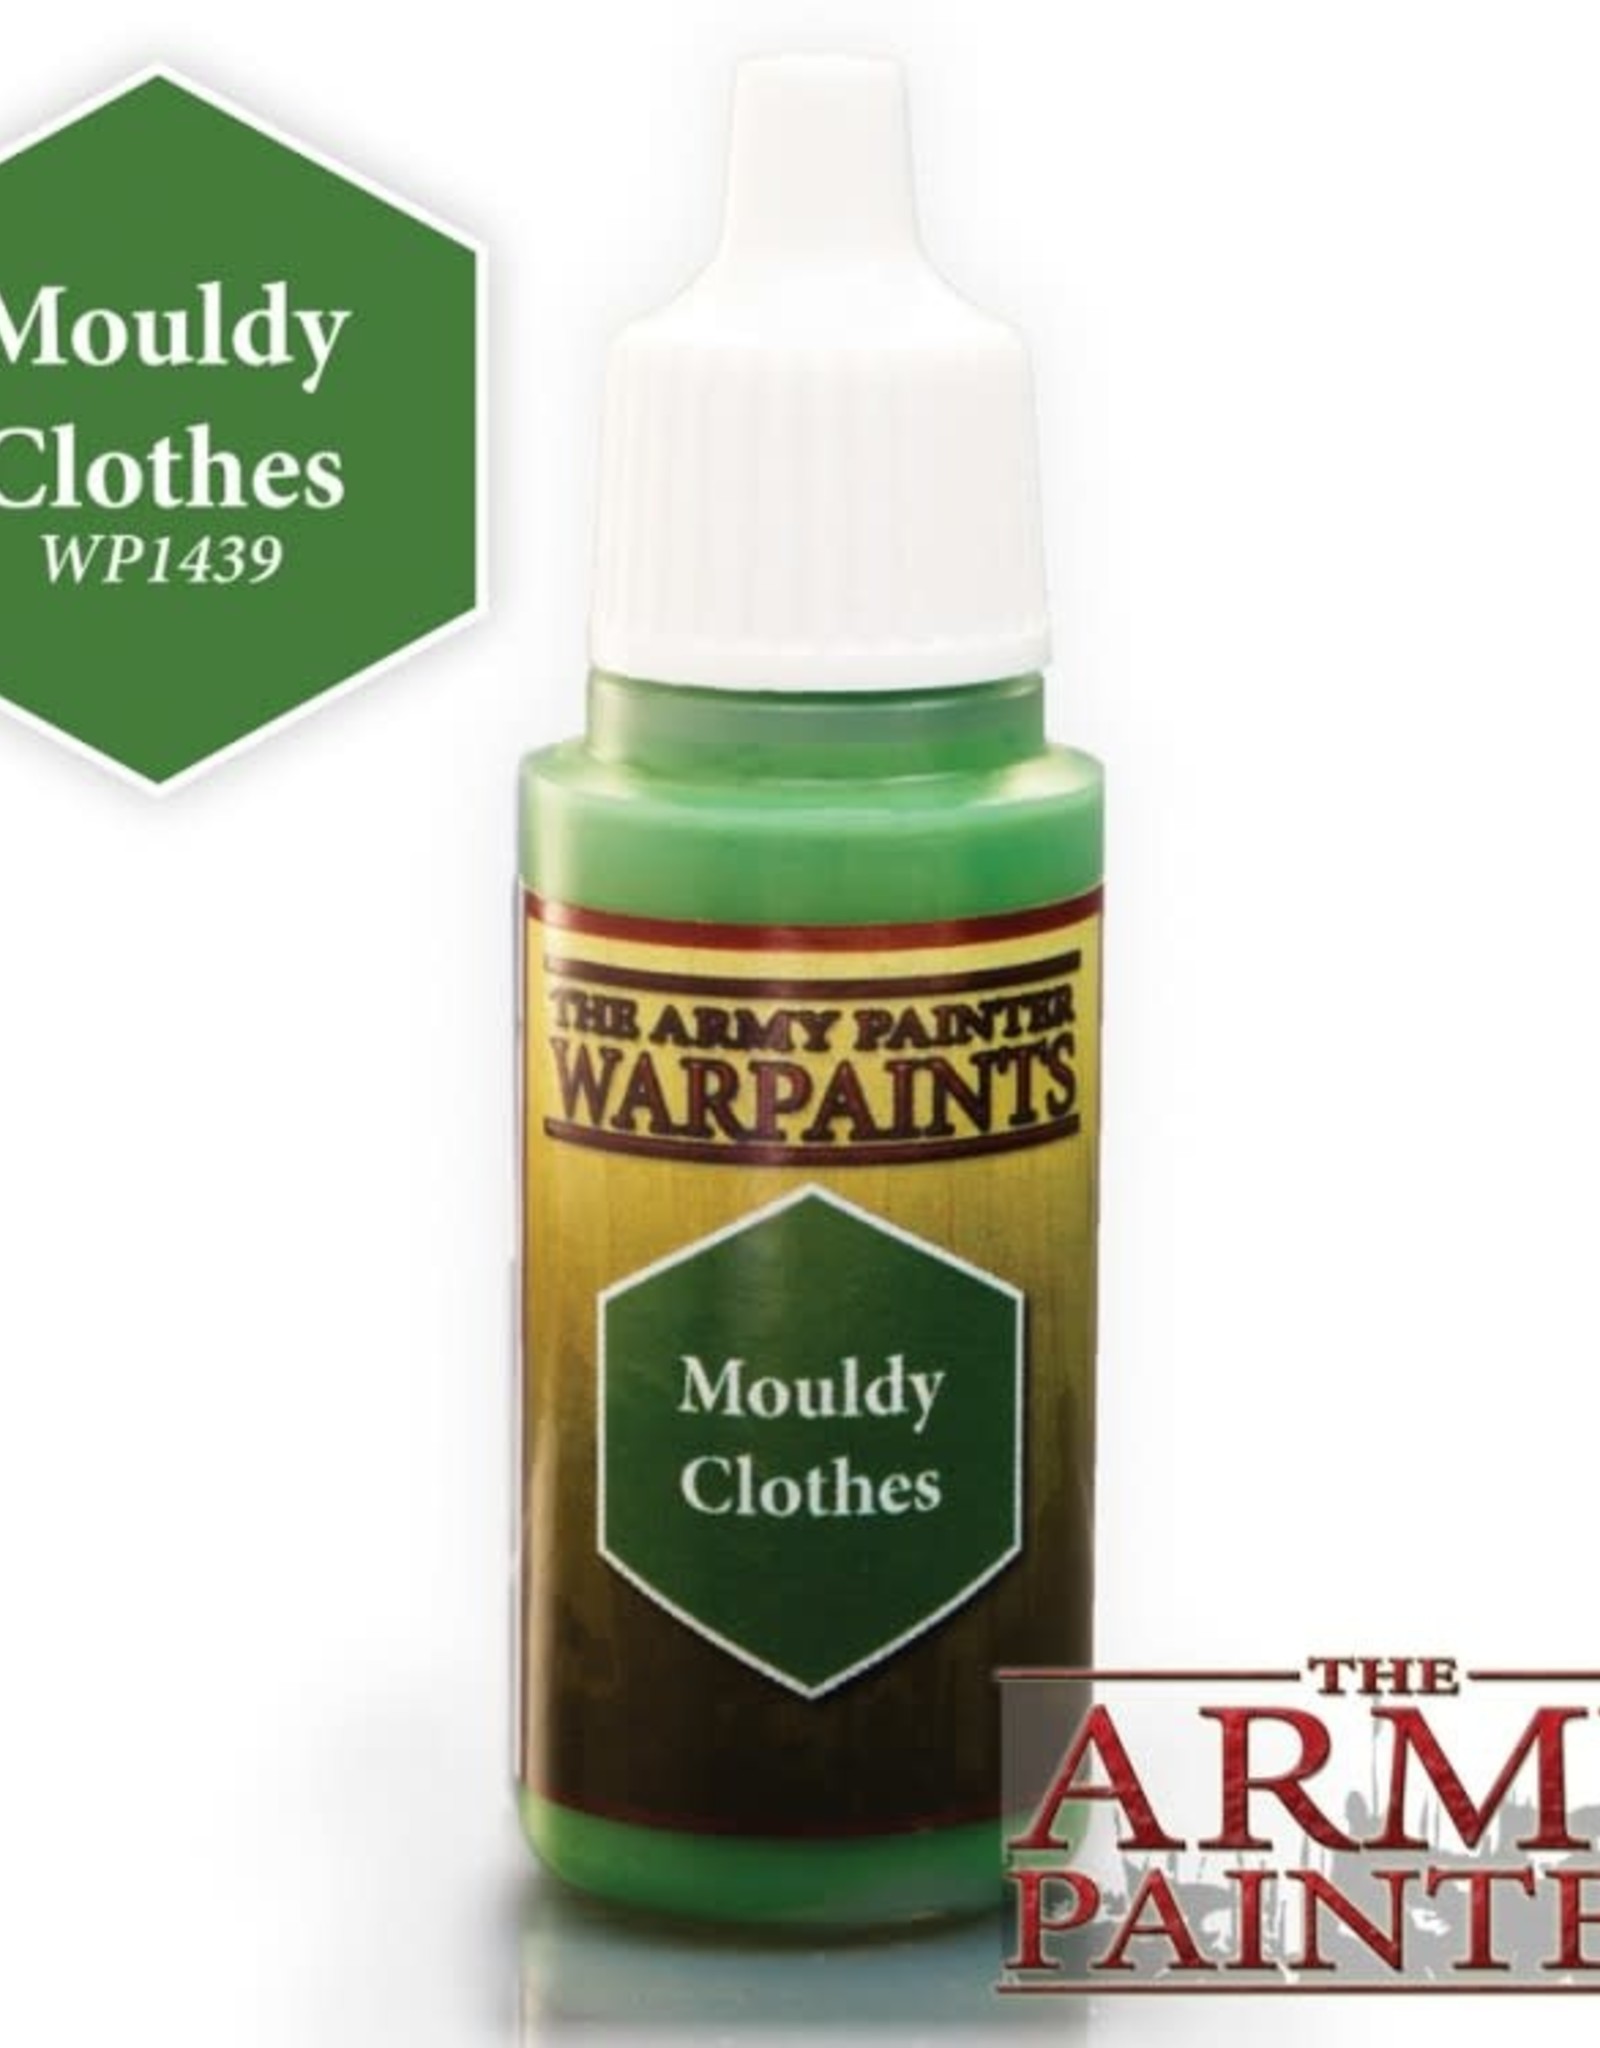 The Army Painter Warpaints - Mouldy Clothes